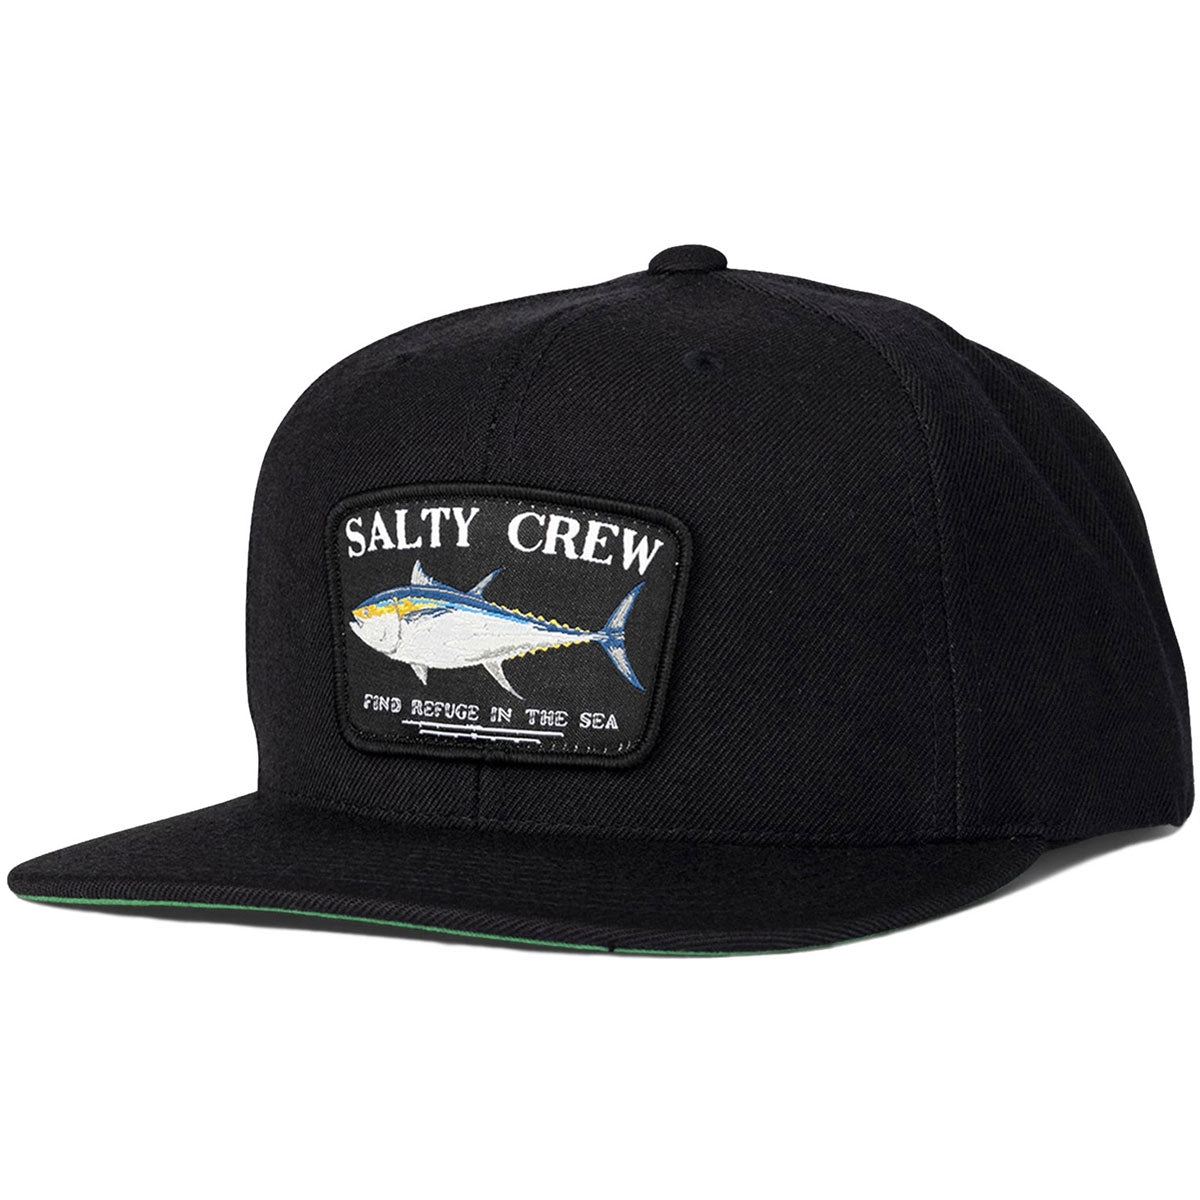 Salty Crew Big Blue 6 Panel Hat - Black image 1